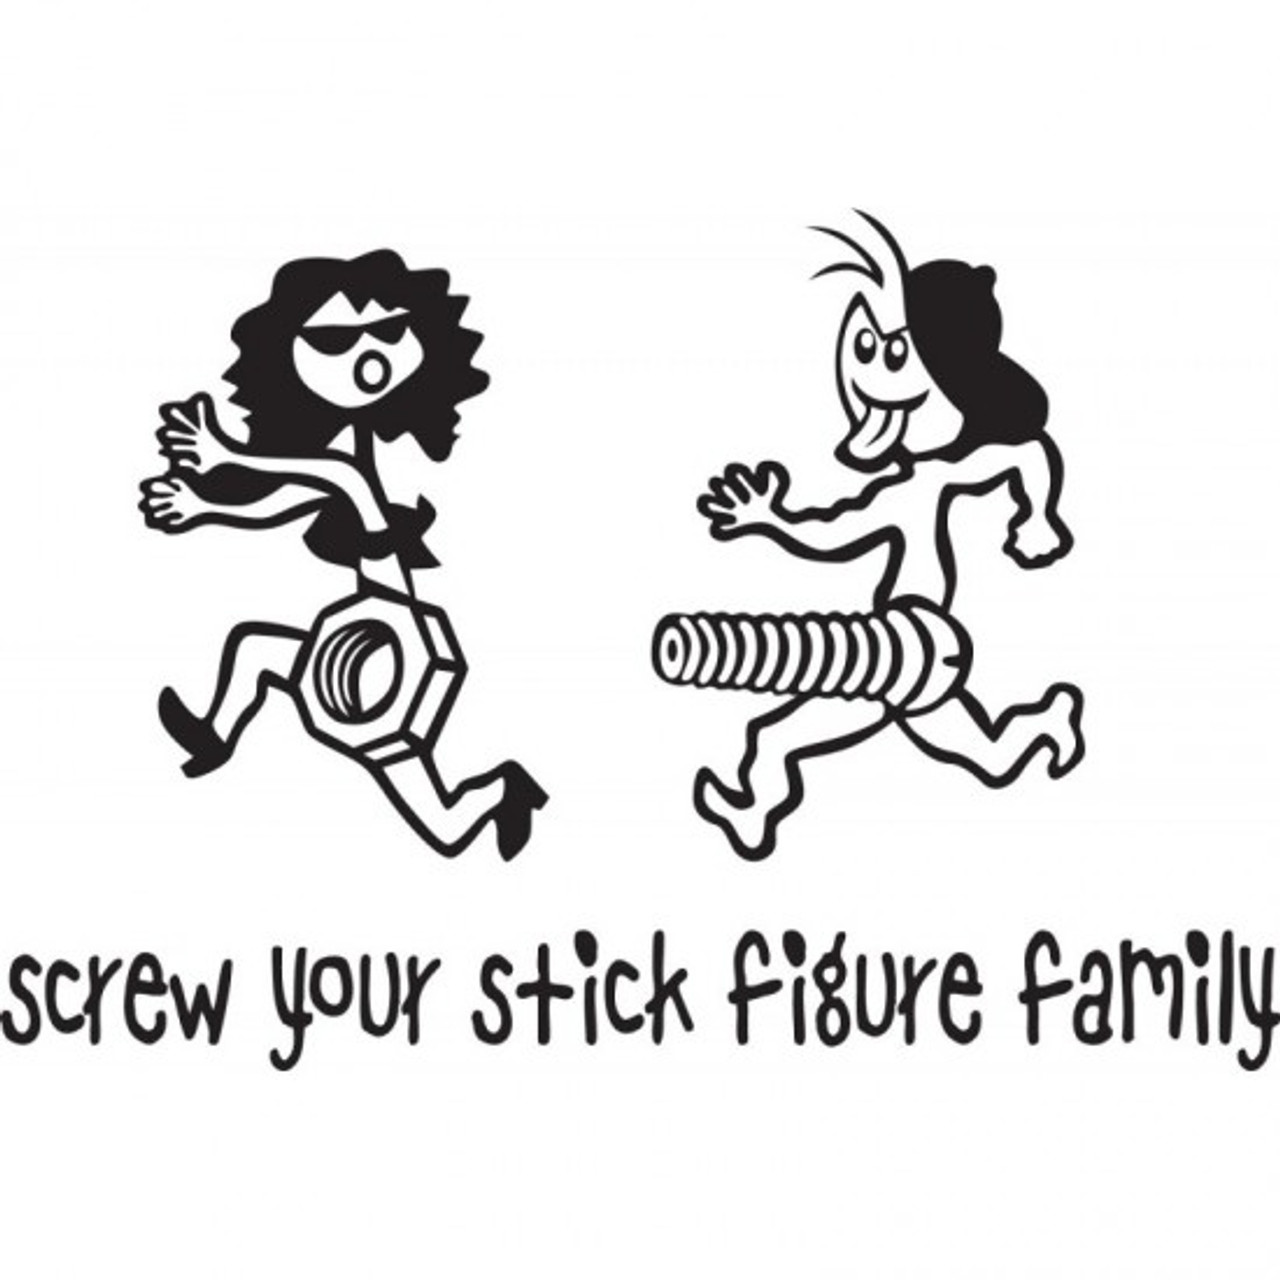 Download Screw Your Stick Figure Family JDM Car Vinyl Sticker Decal